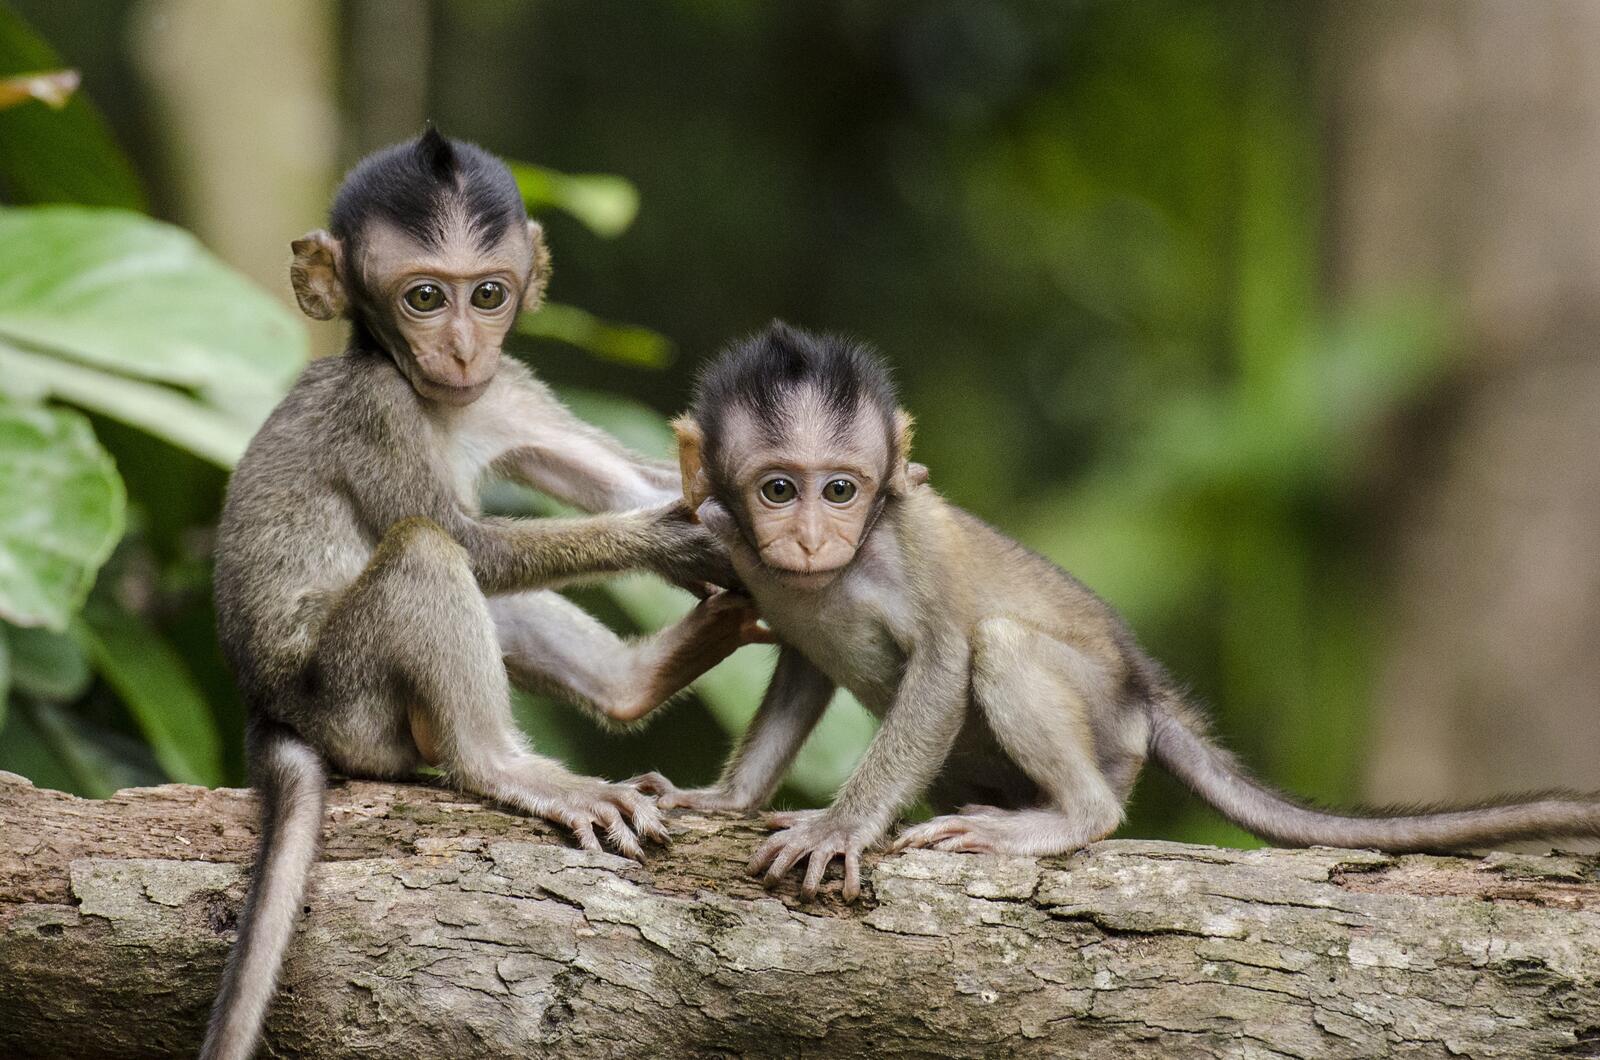 Обои monkeys мартышки обезьяны на рабочий стол